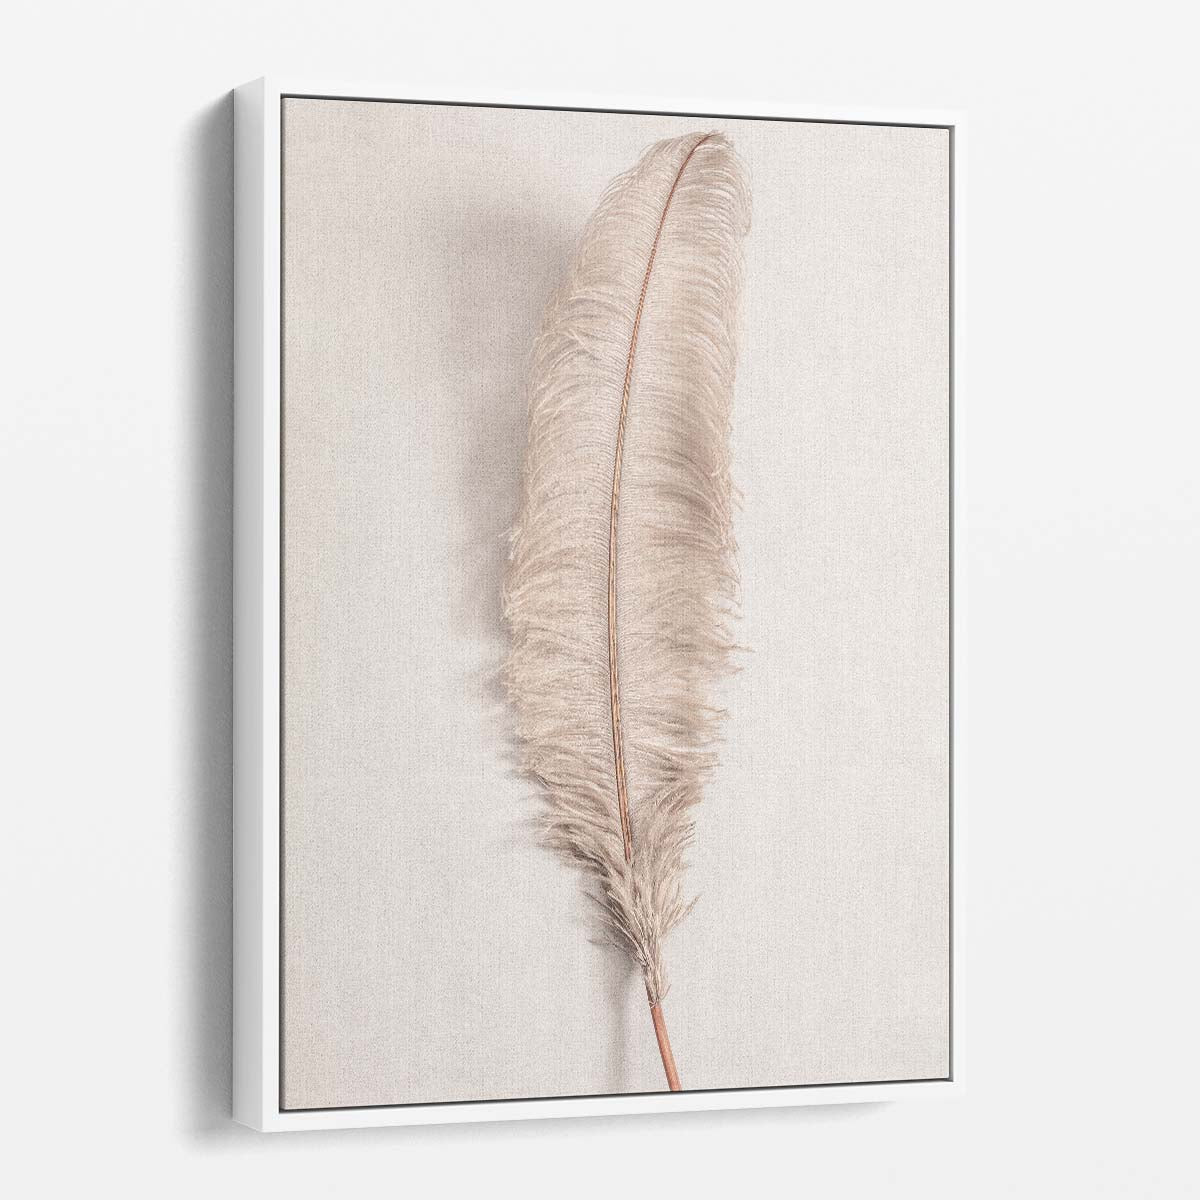 Studio Photography, Beige Bird Feather Still Life Art by Luxuriance Designs, made in USA